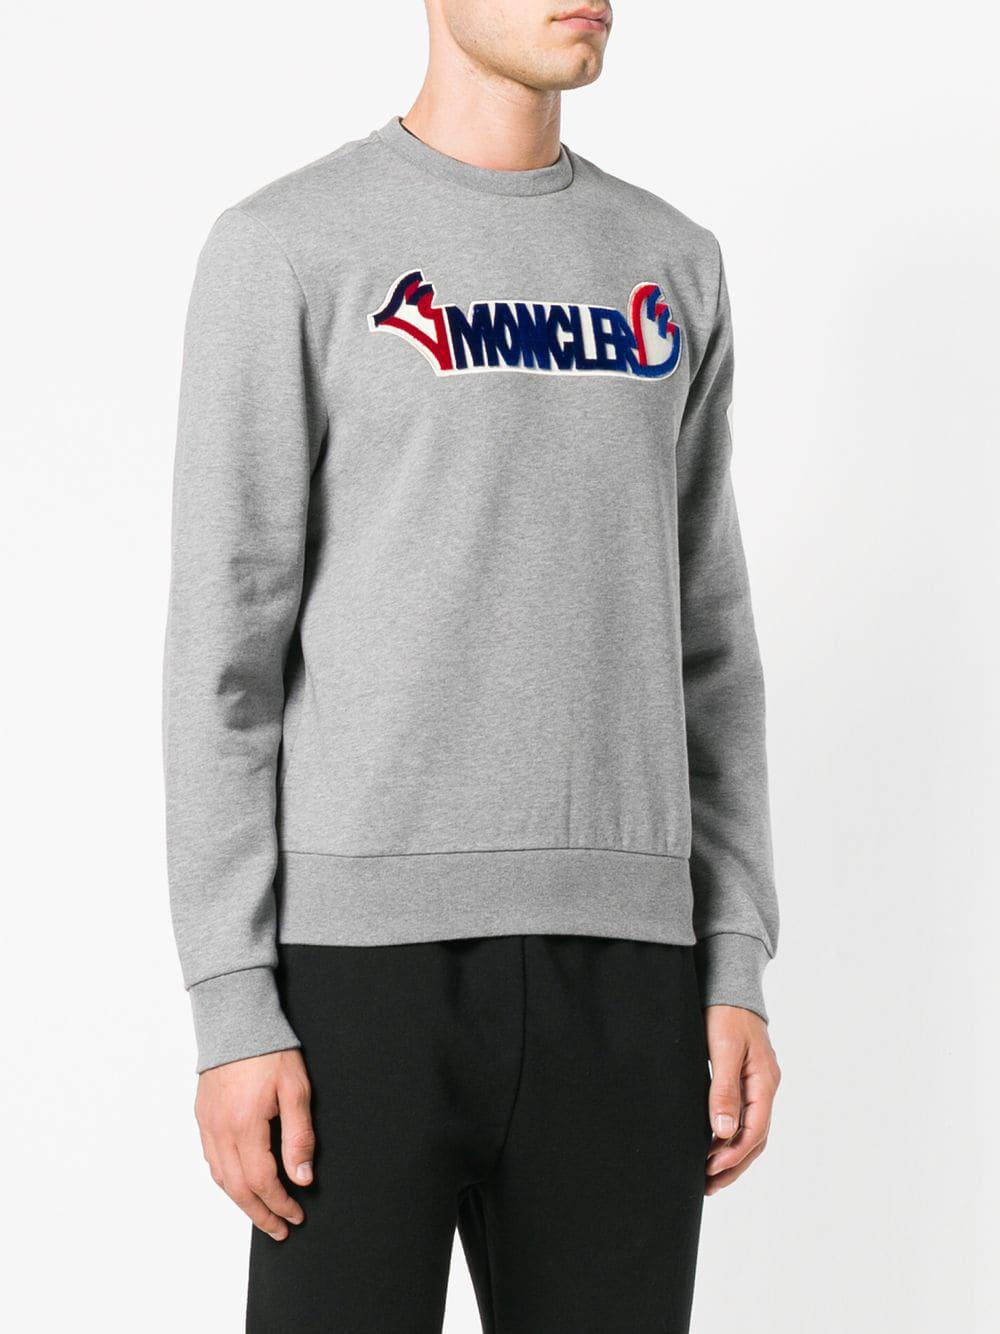 Moncler Logo Sweatshirt in Grey (Grey) for Men - Lyst